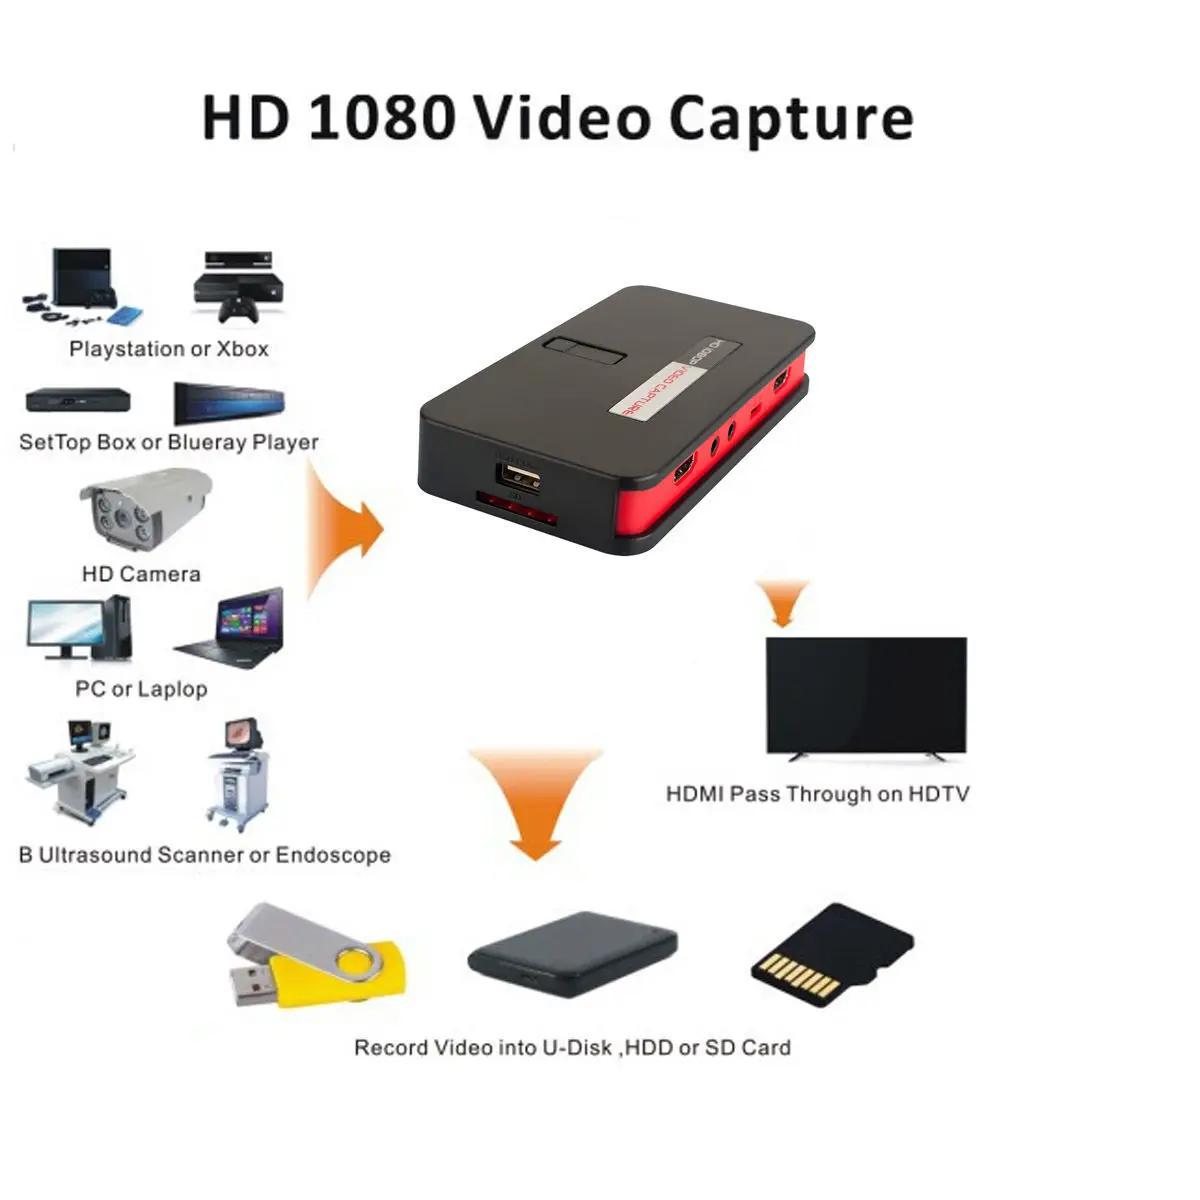 HD игровой захват на ezcap 284 1080p av/ypbpr видеорекордер USB коробка SD карта Xbox360/One PS3/4 On.